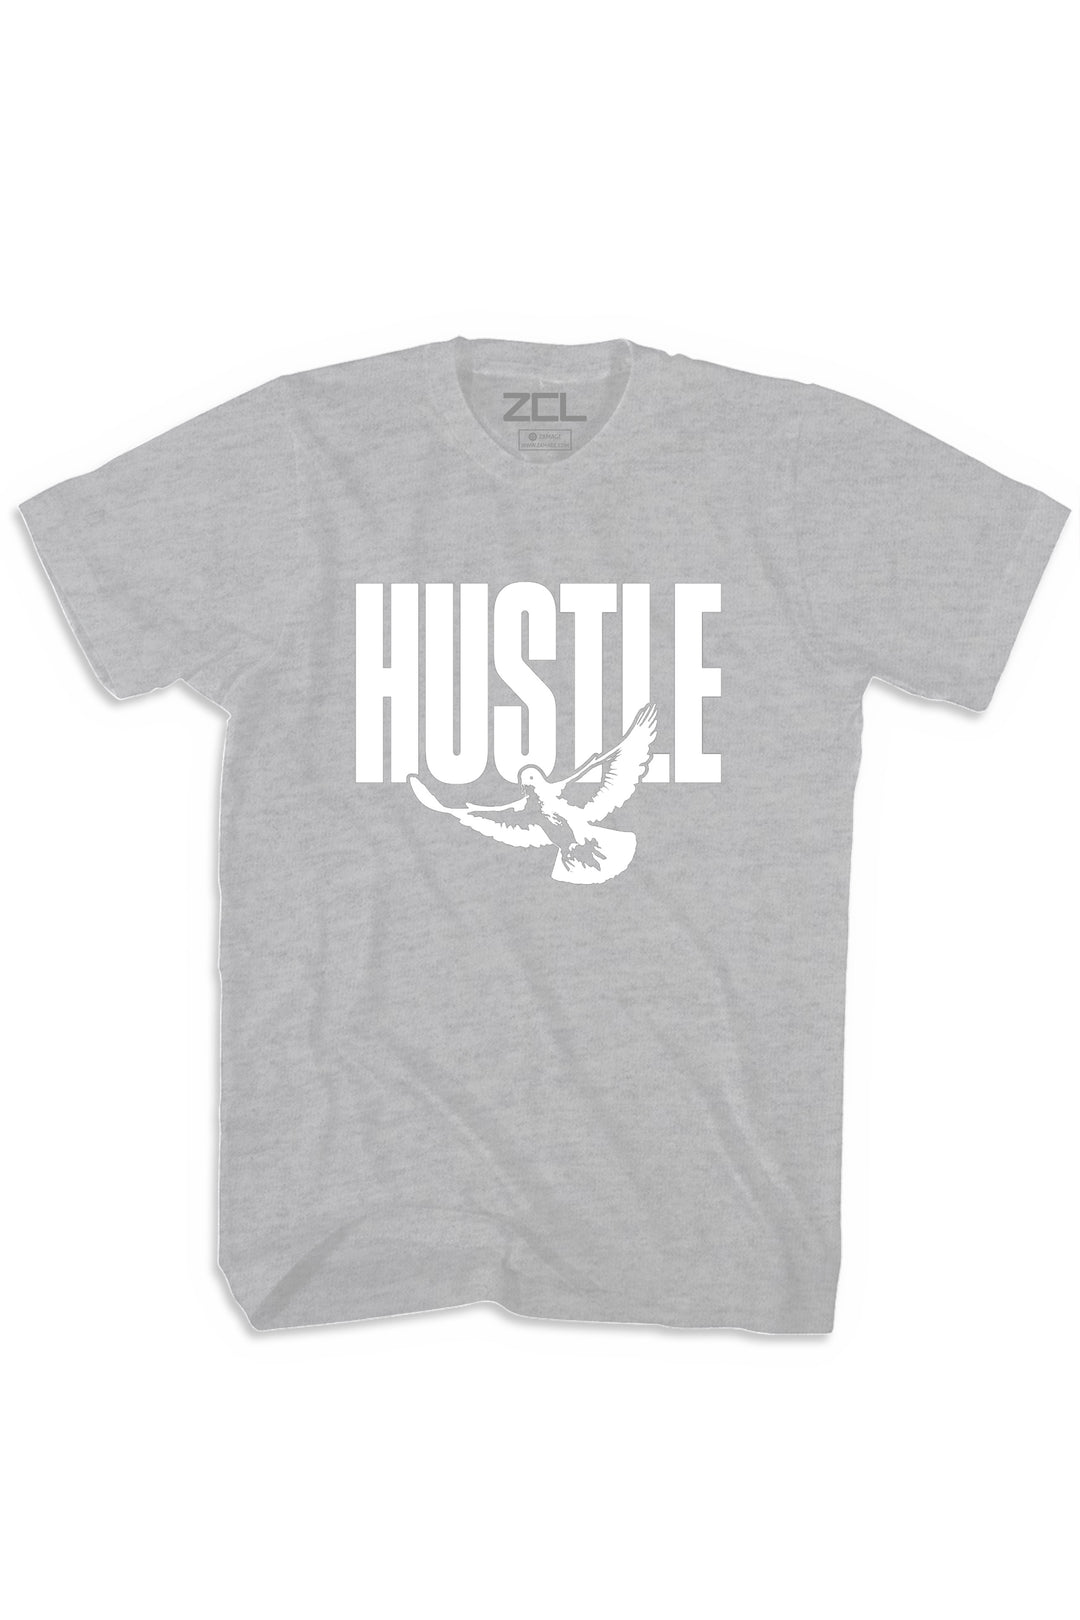 Hustle Dove Tee (White Logo) - Zamage